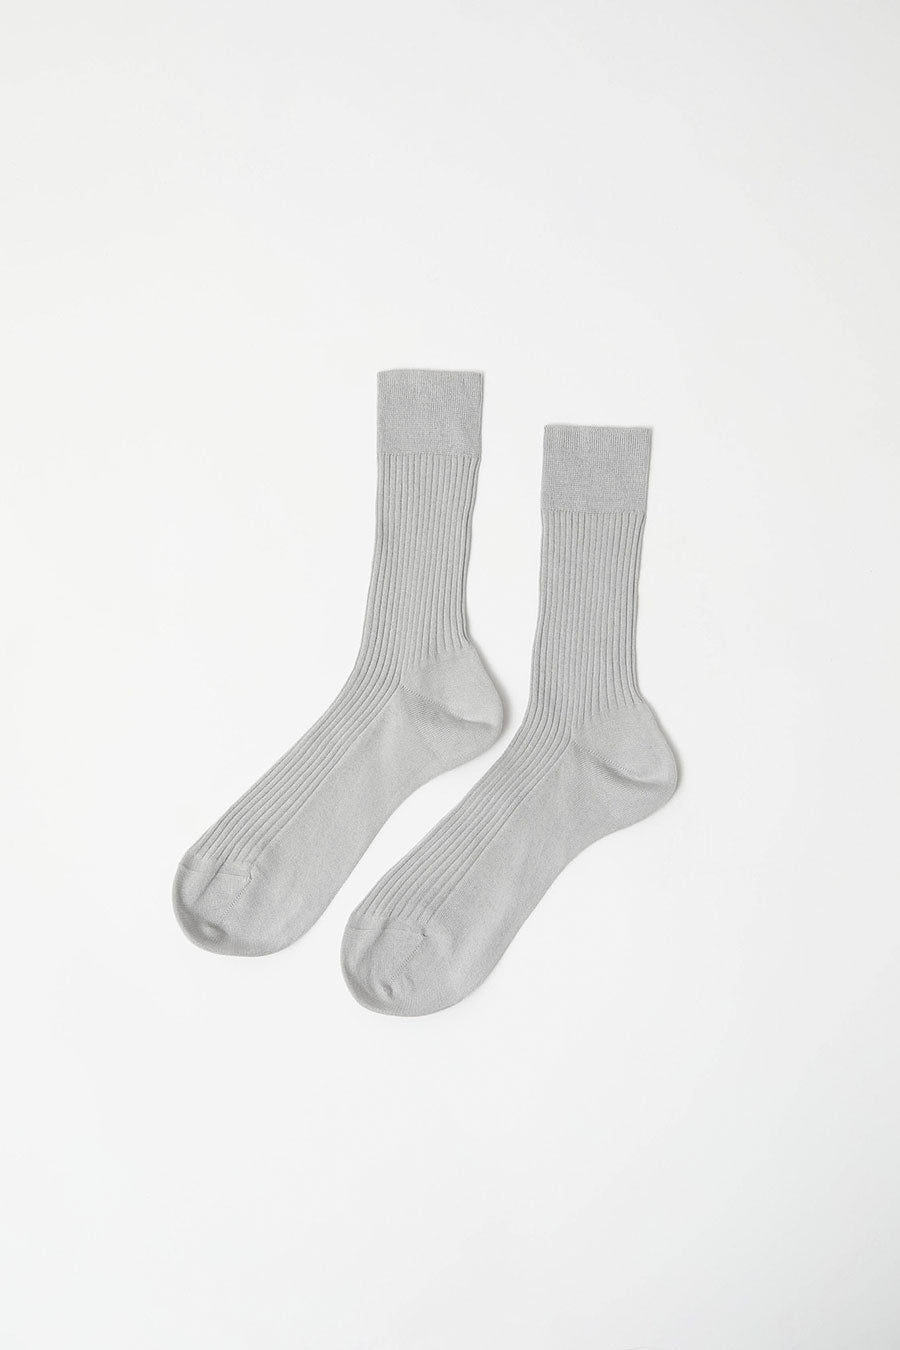 Maria La Rosa Ribbed Mid Calf Bio Cotton Socks in Pale Grey